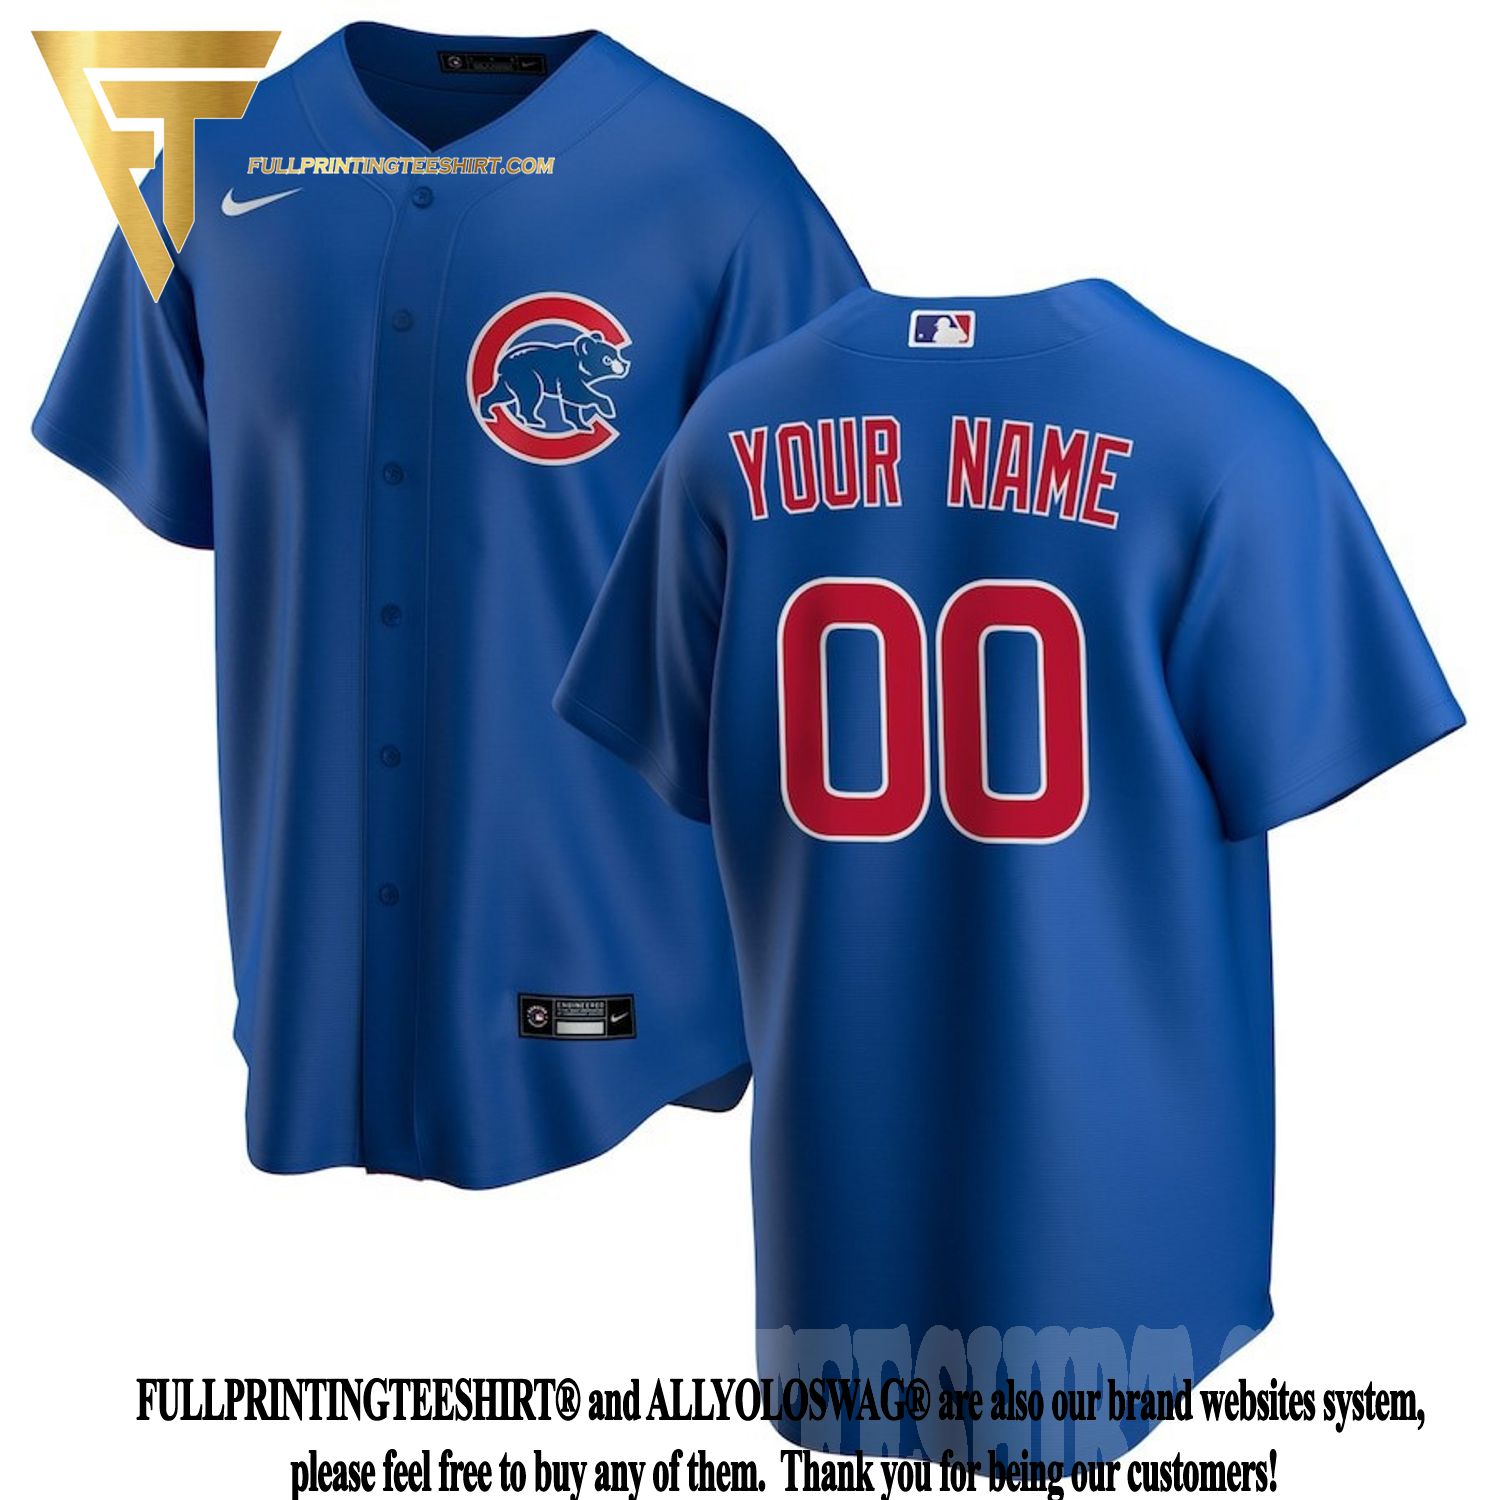 Chicago Cubs Royal Flip Shirt